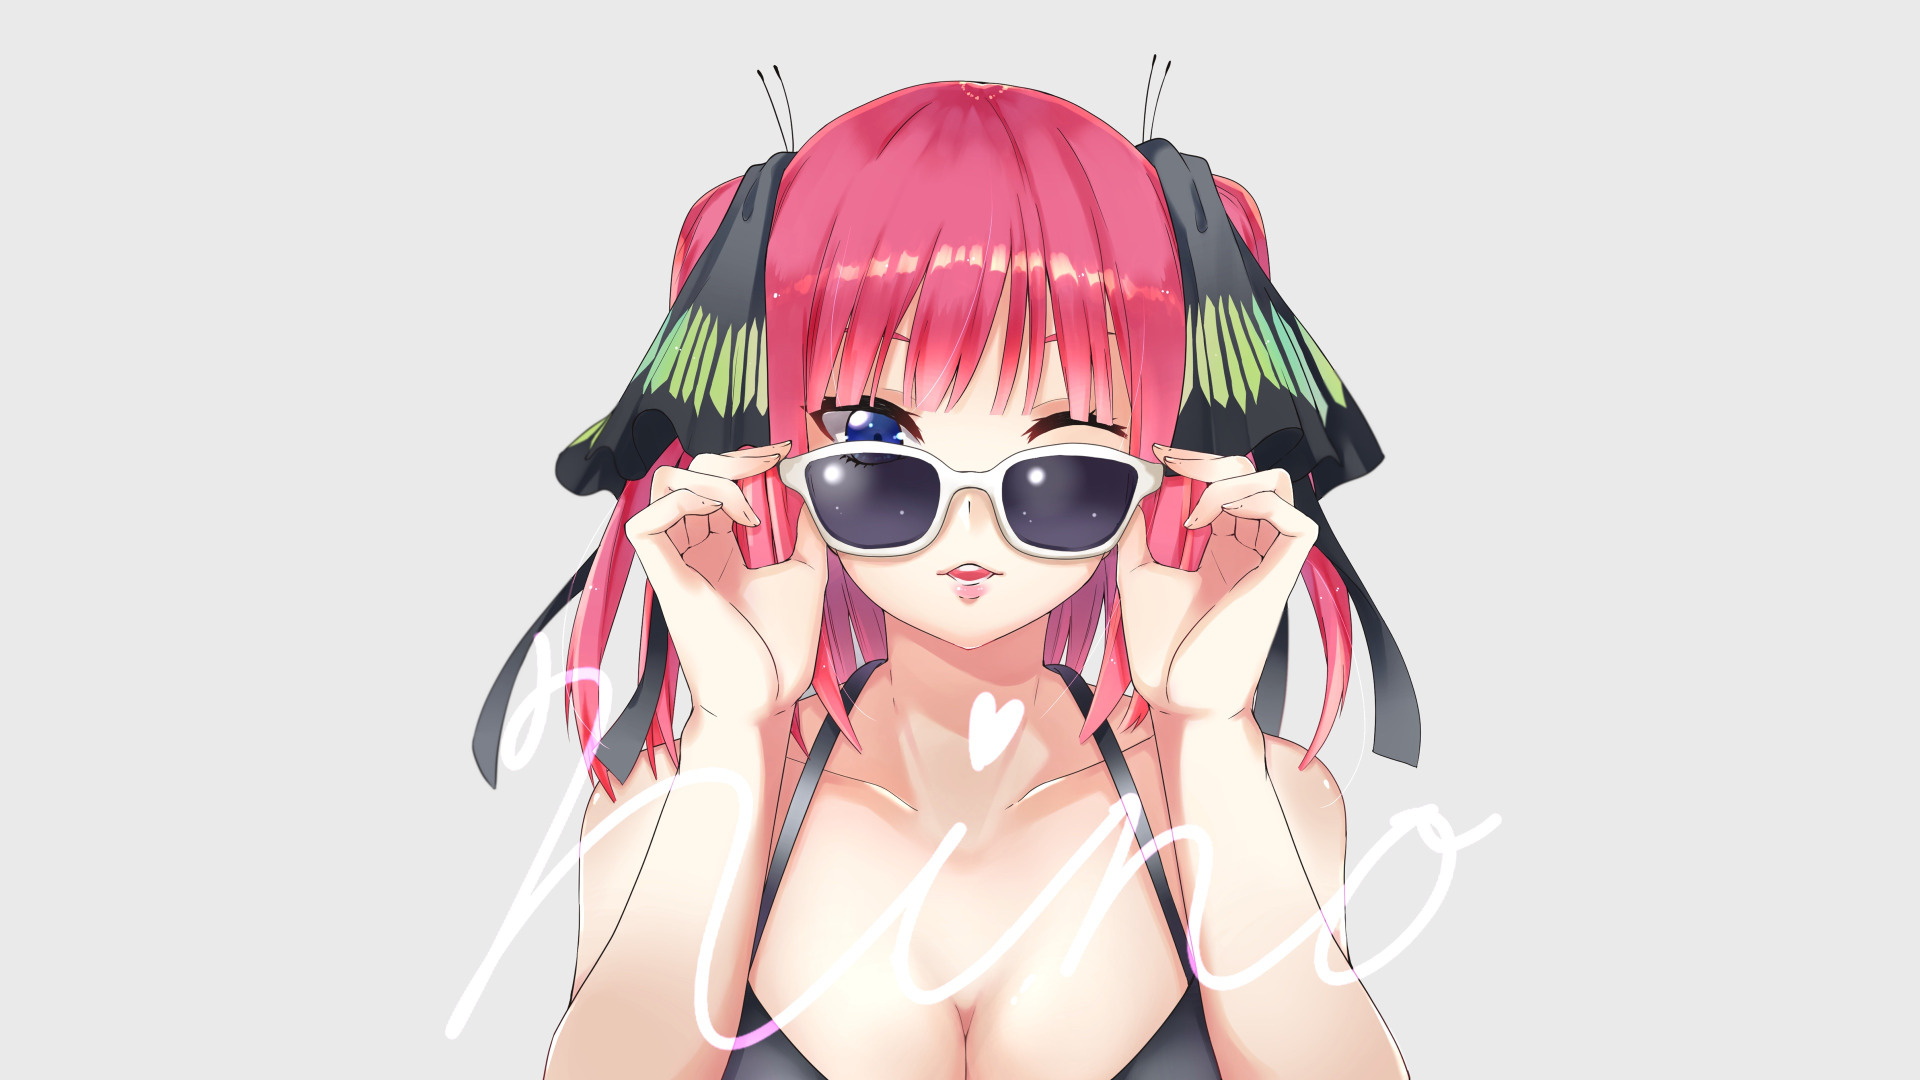 Download wallpaper kawaii, girl, hot, sexy, pink hair, anime, pretty, babe,  cute, bikini, sunglasses, anime girl, smirk, anime babe, nino, section  seinen in resolution 1920x1080